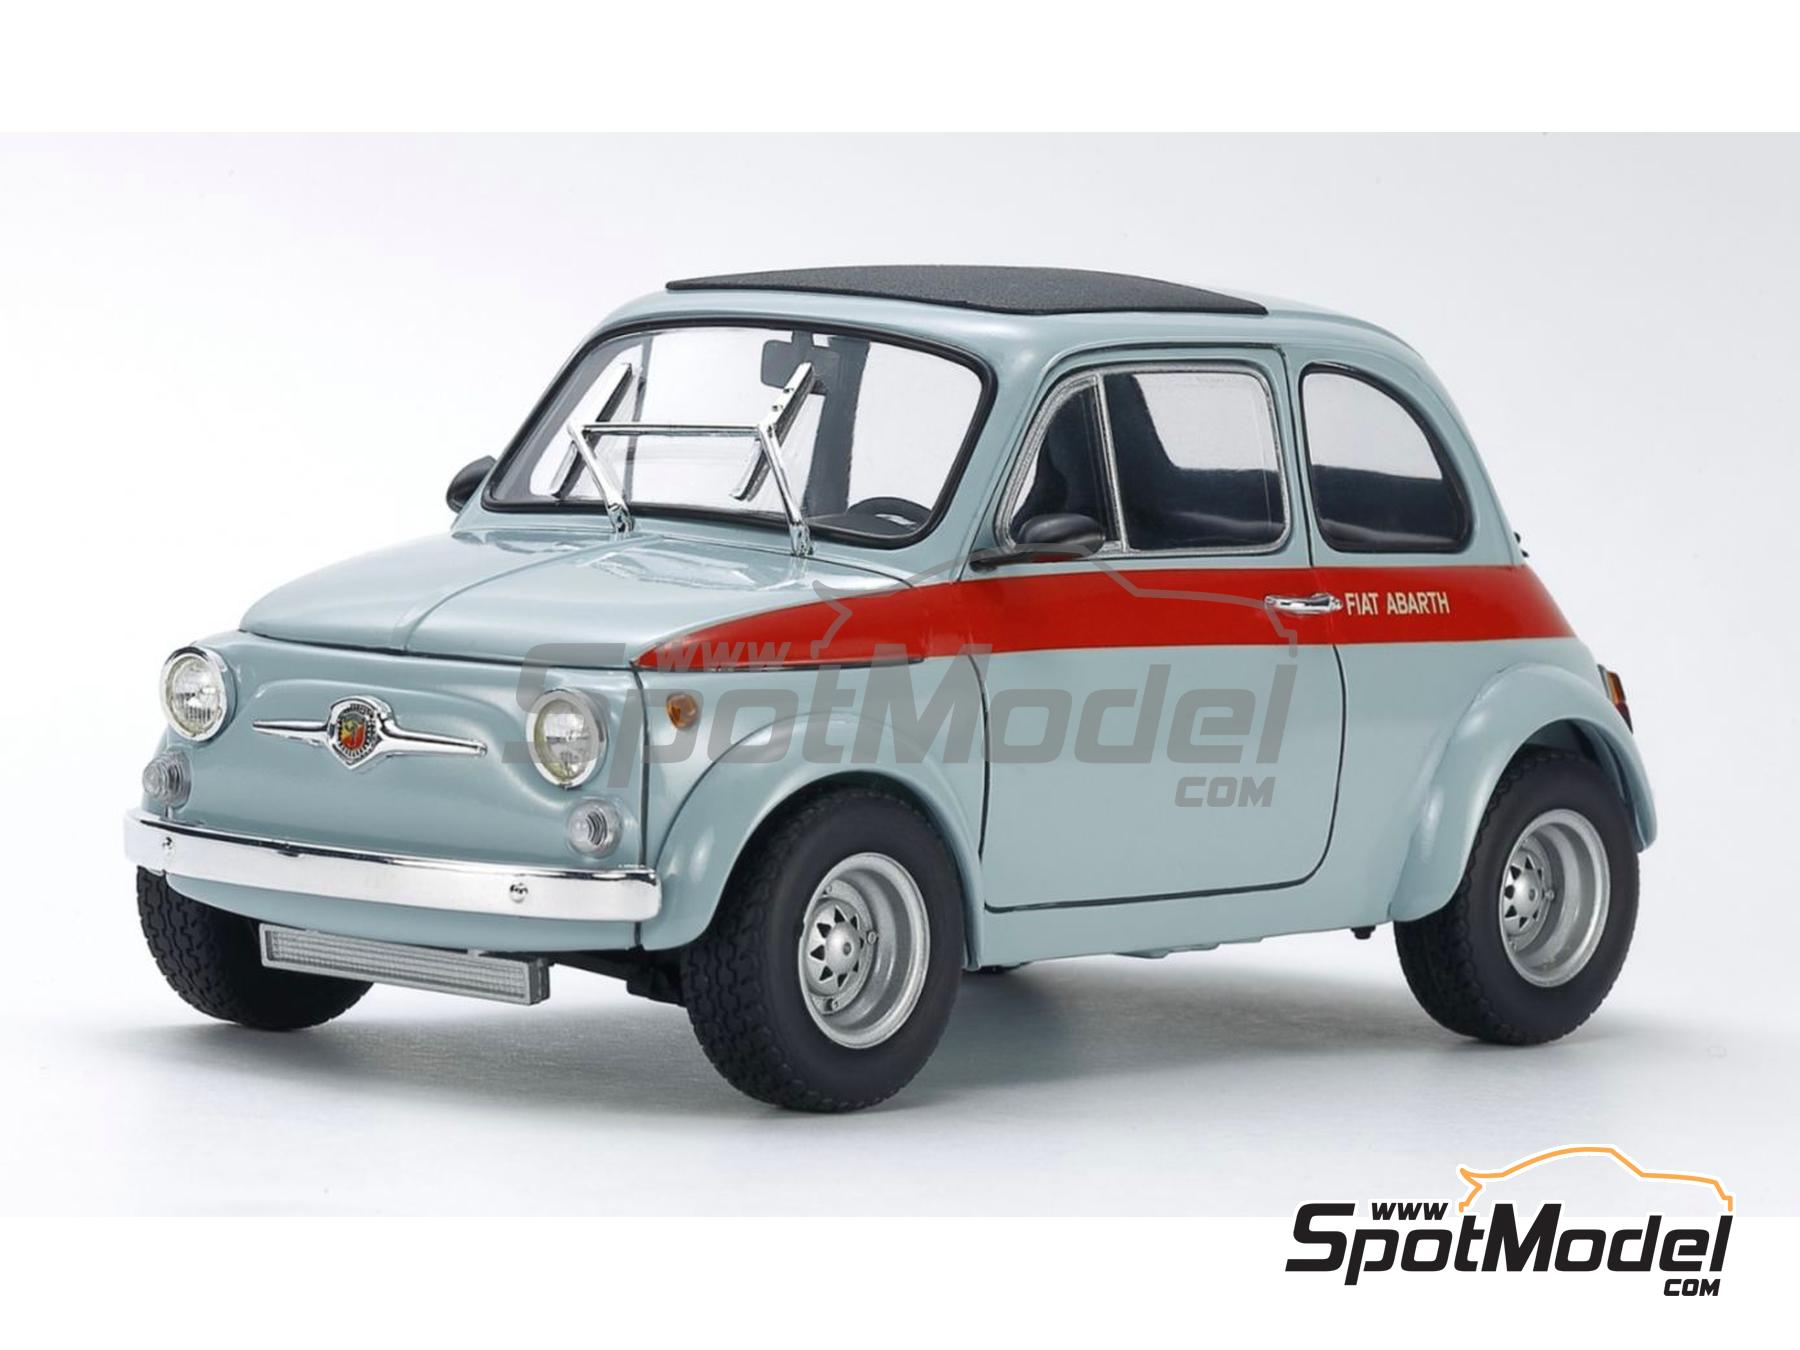 Tamiya 24169: Car scale model kit 1/24 scale - Fiat 500F (ref. TAM24169)